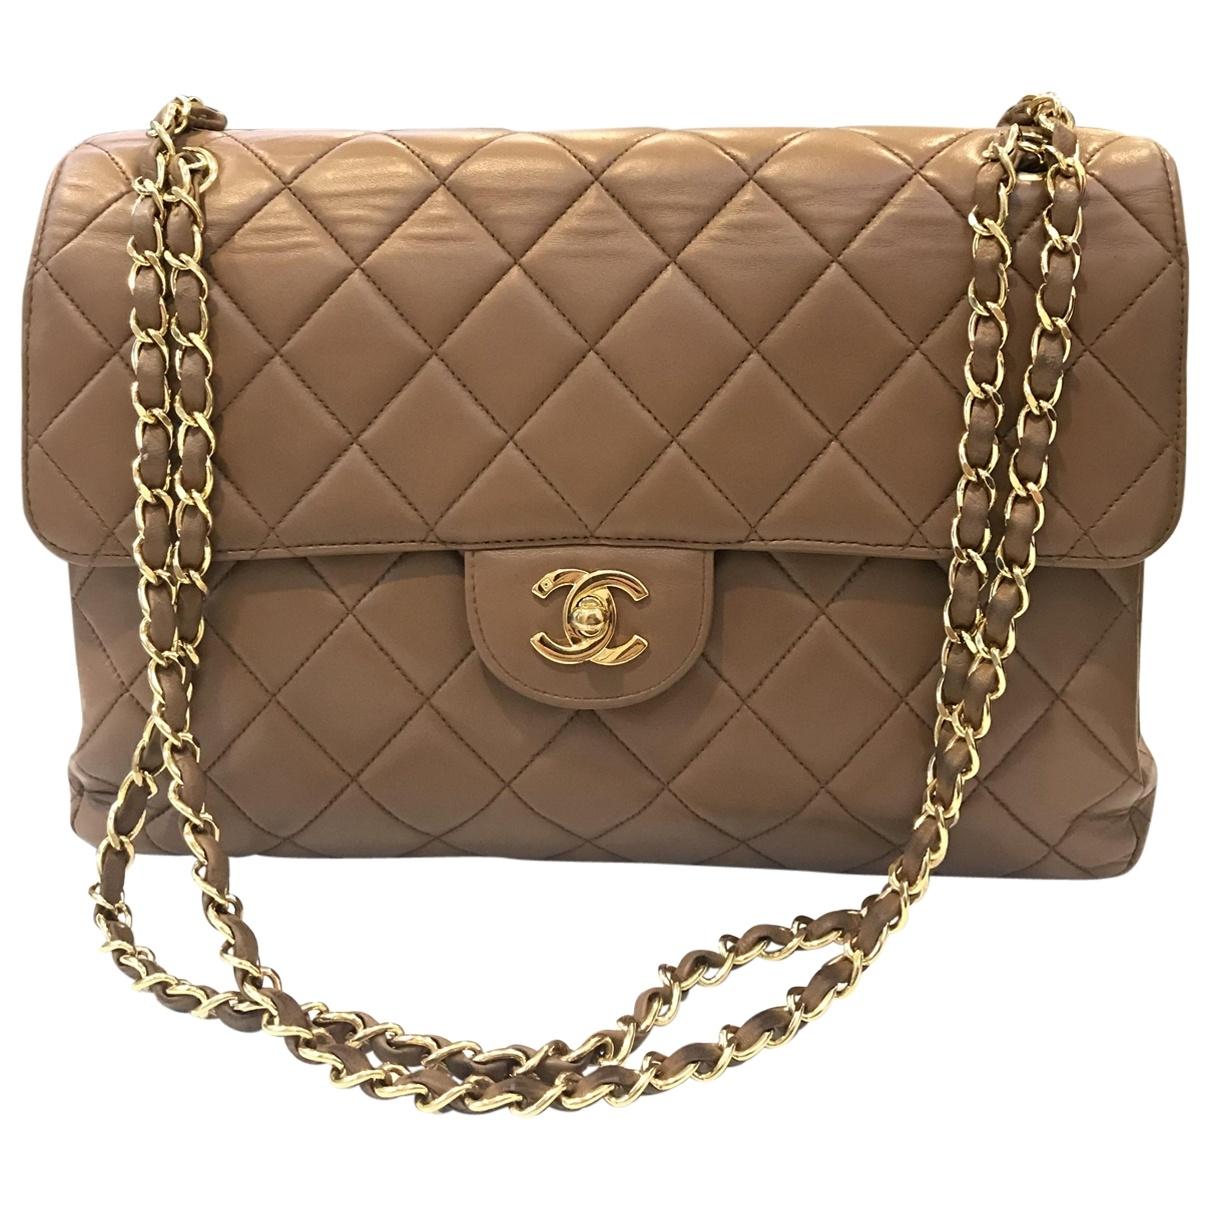 Chanel Classic Handbag Canada Covid Semashow Com